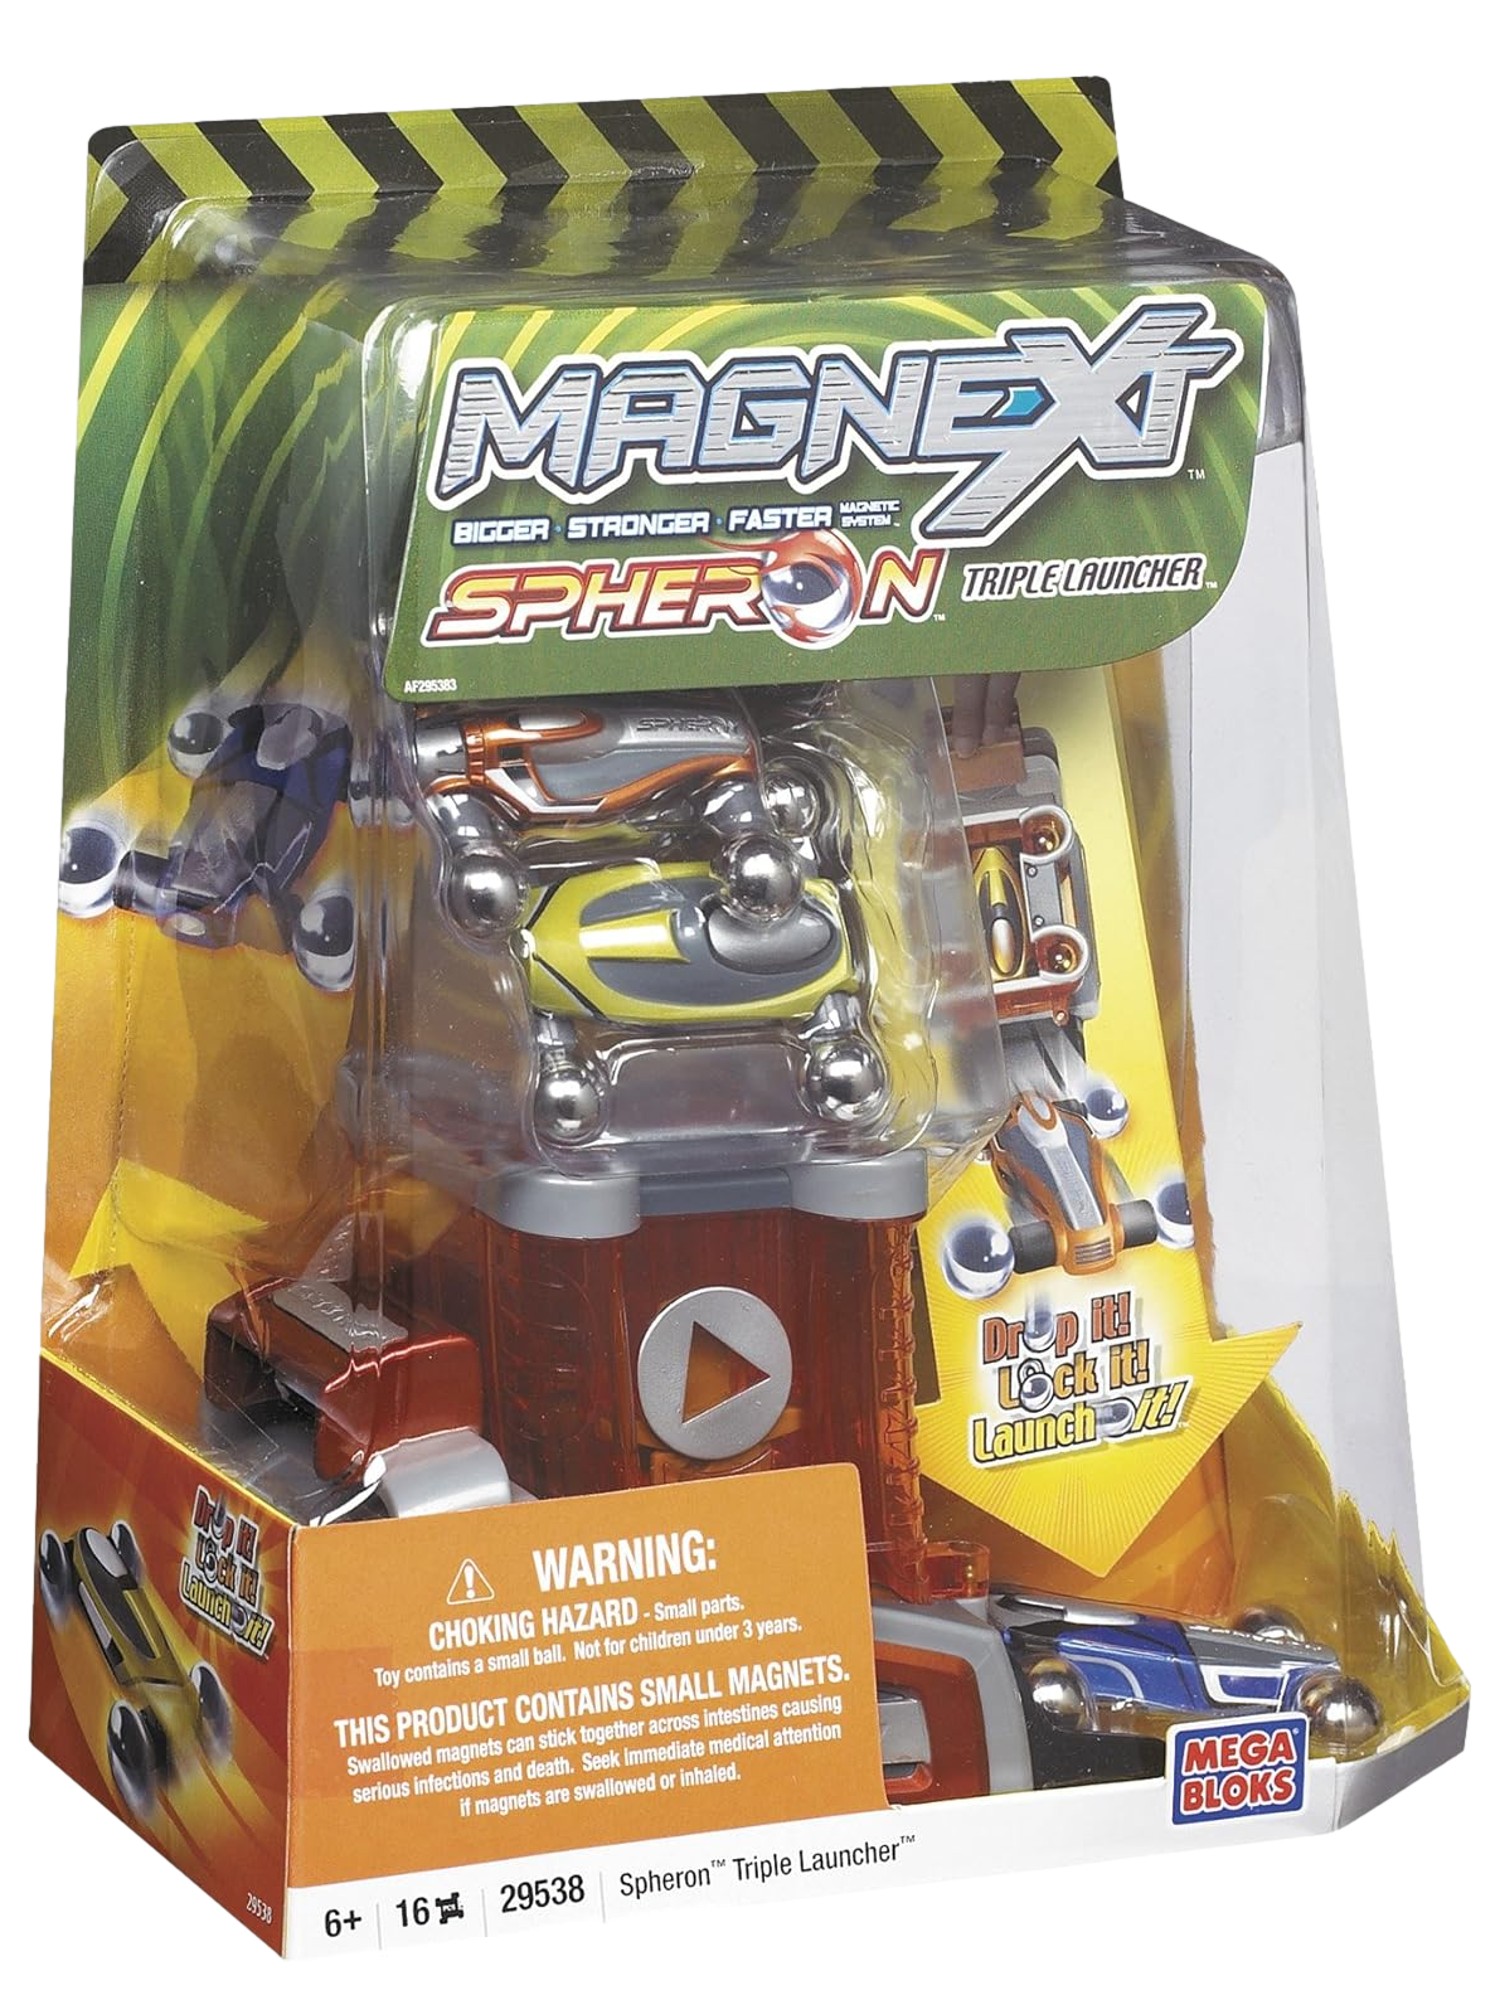 Mega Bloks Magnext Spheron Triple Launcher & Cars Set - image 1 of 3